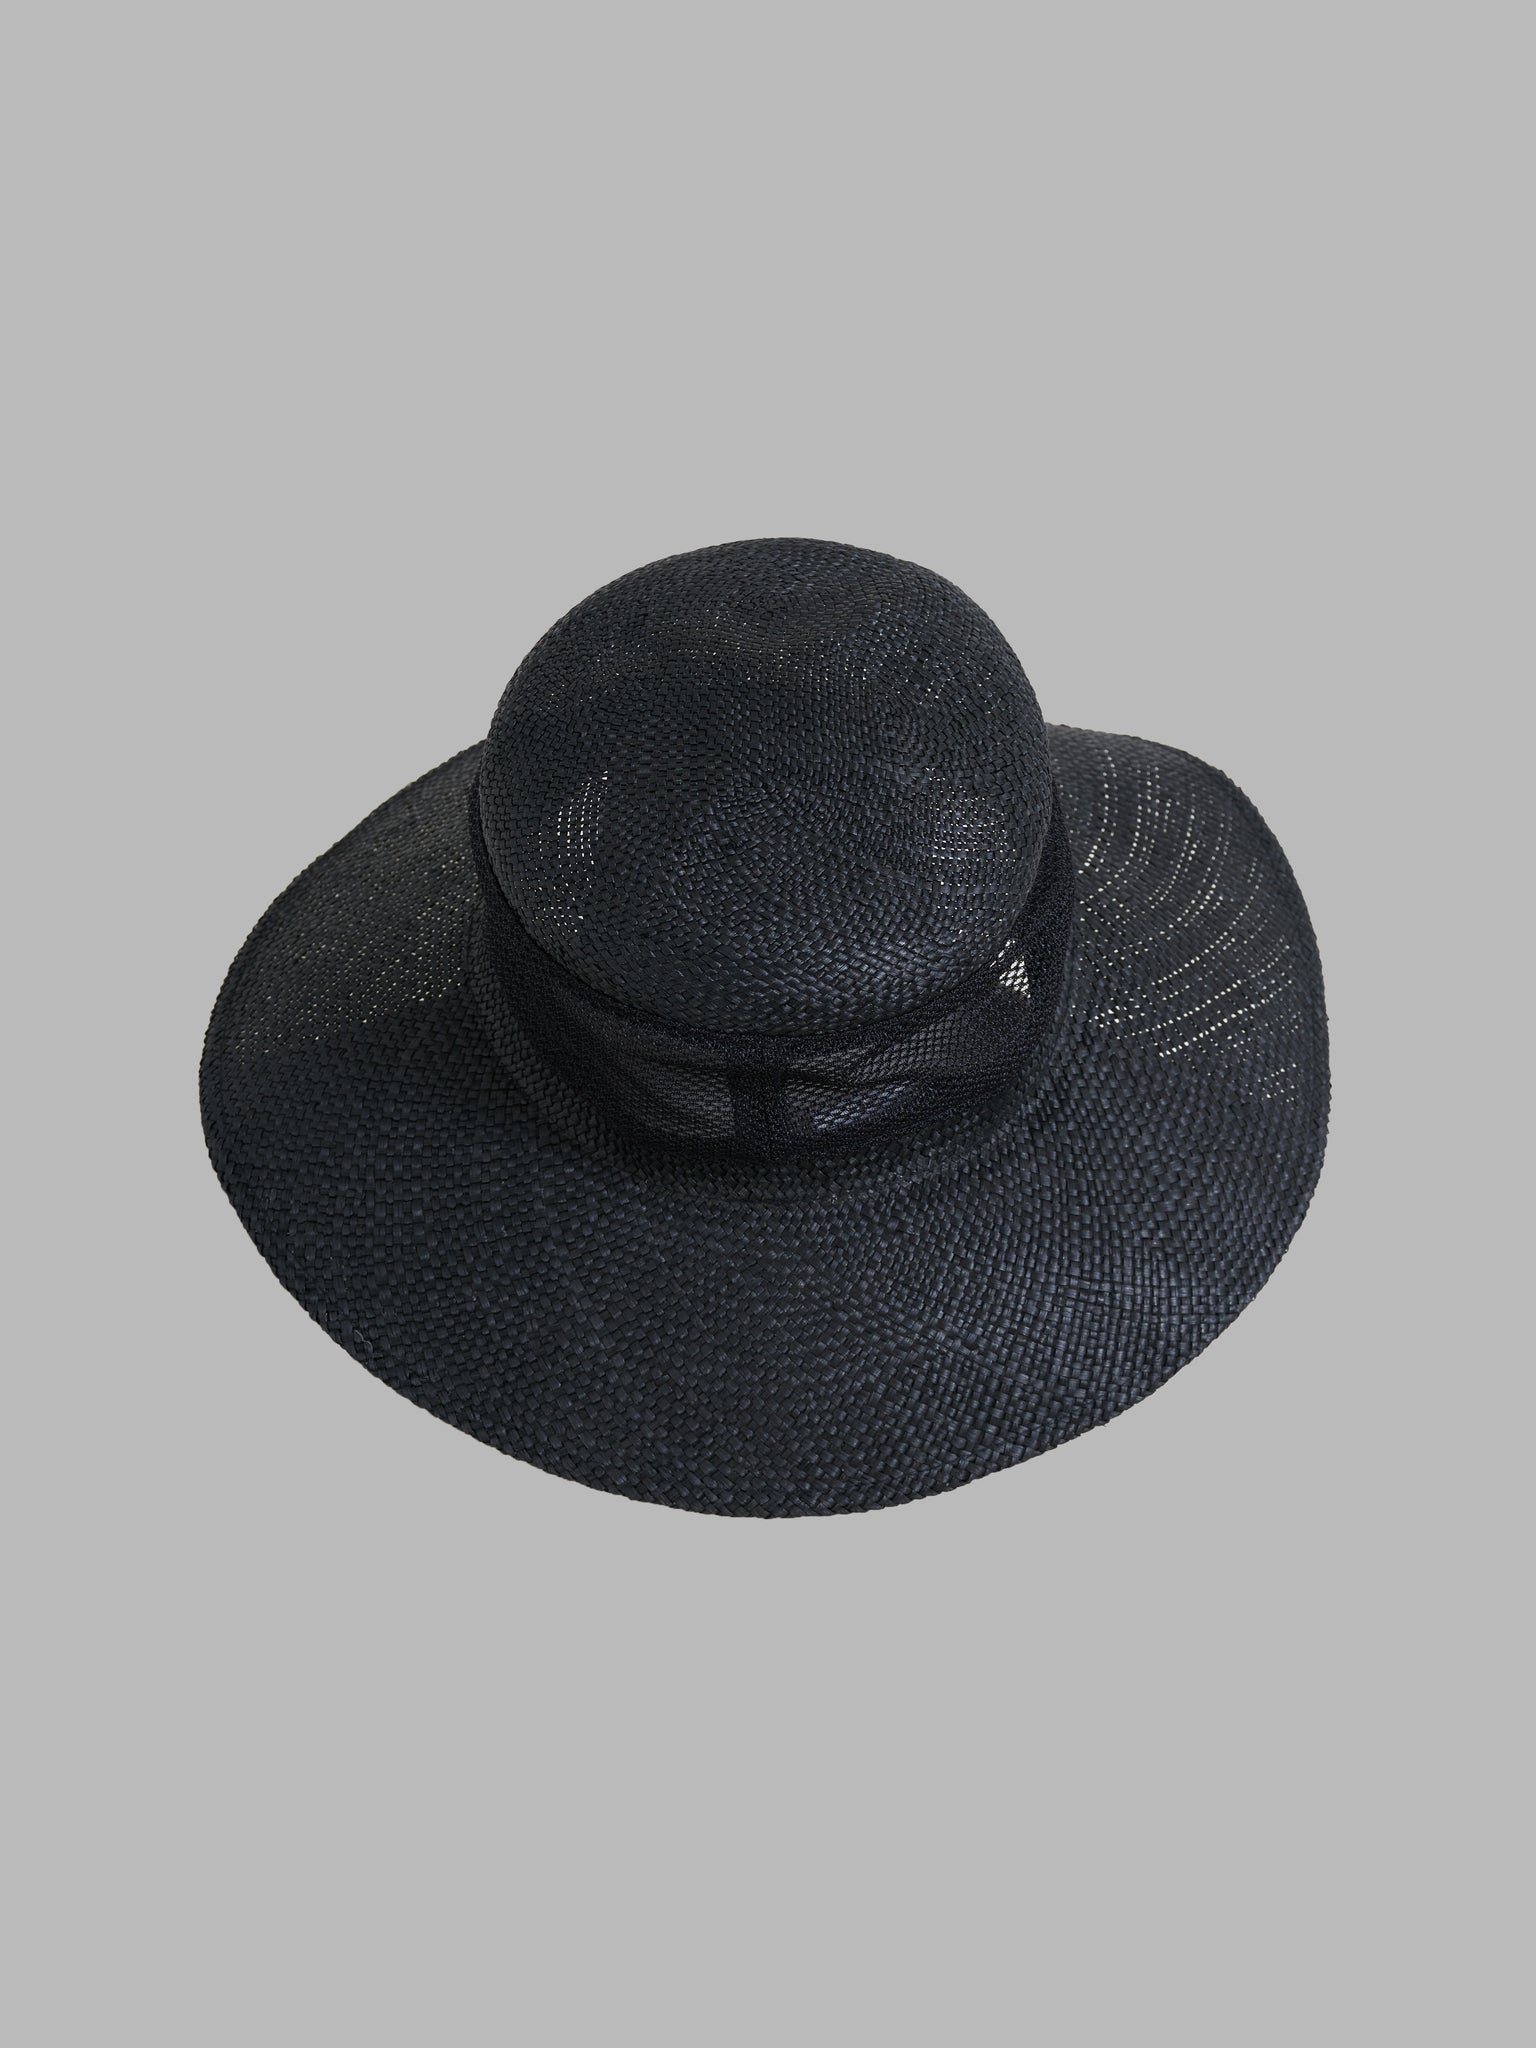 Yoshiki Hishinuma black straw wide brim hat with mesh air panel - size 57.5